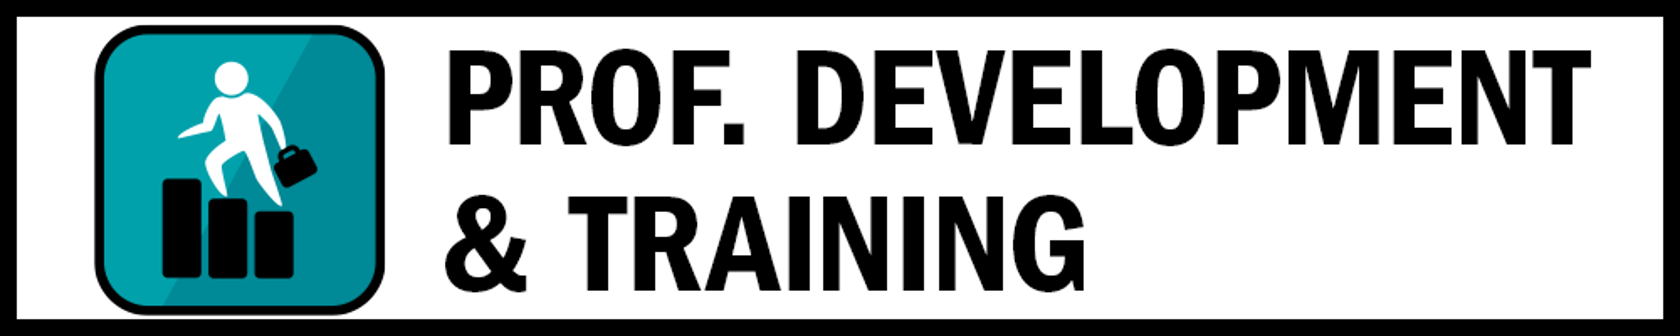 Professional Development and Training